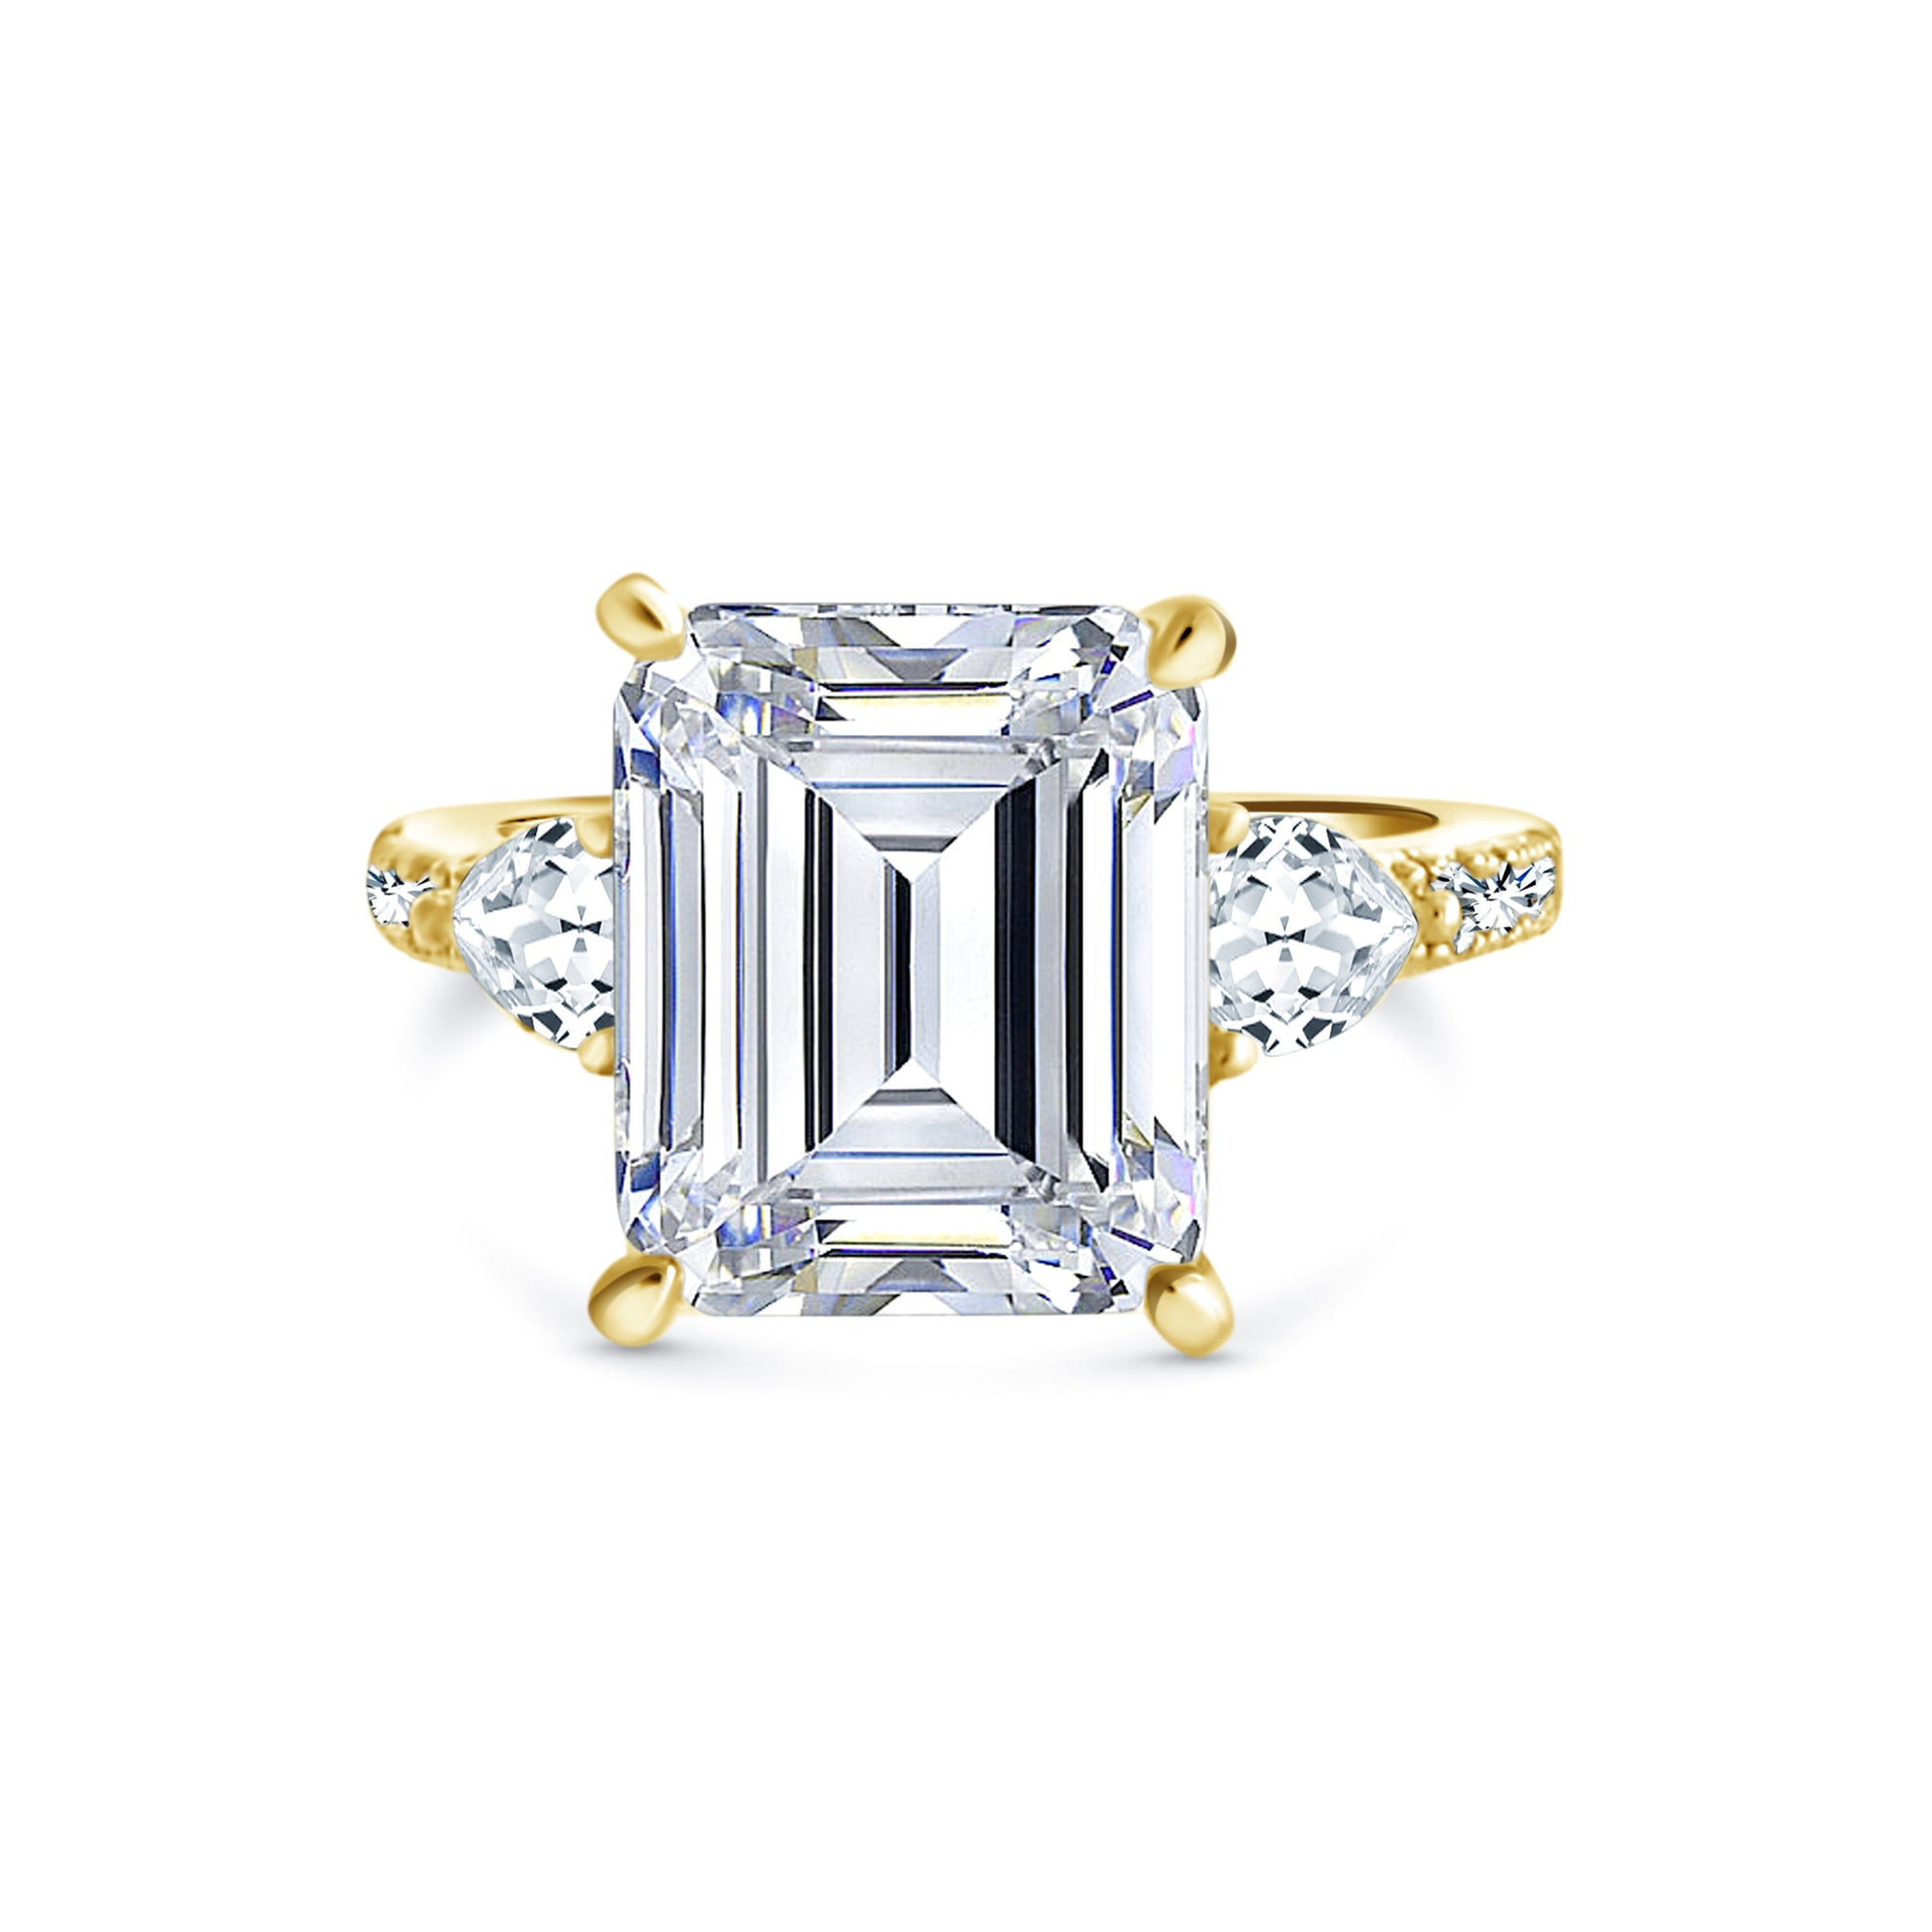 Sterling silver emerald cut cz ring with heart side stones – Gemma Azzurro